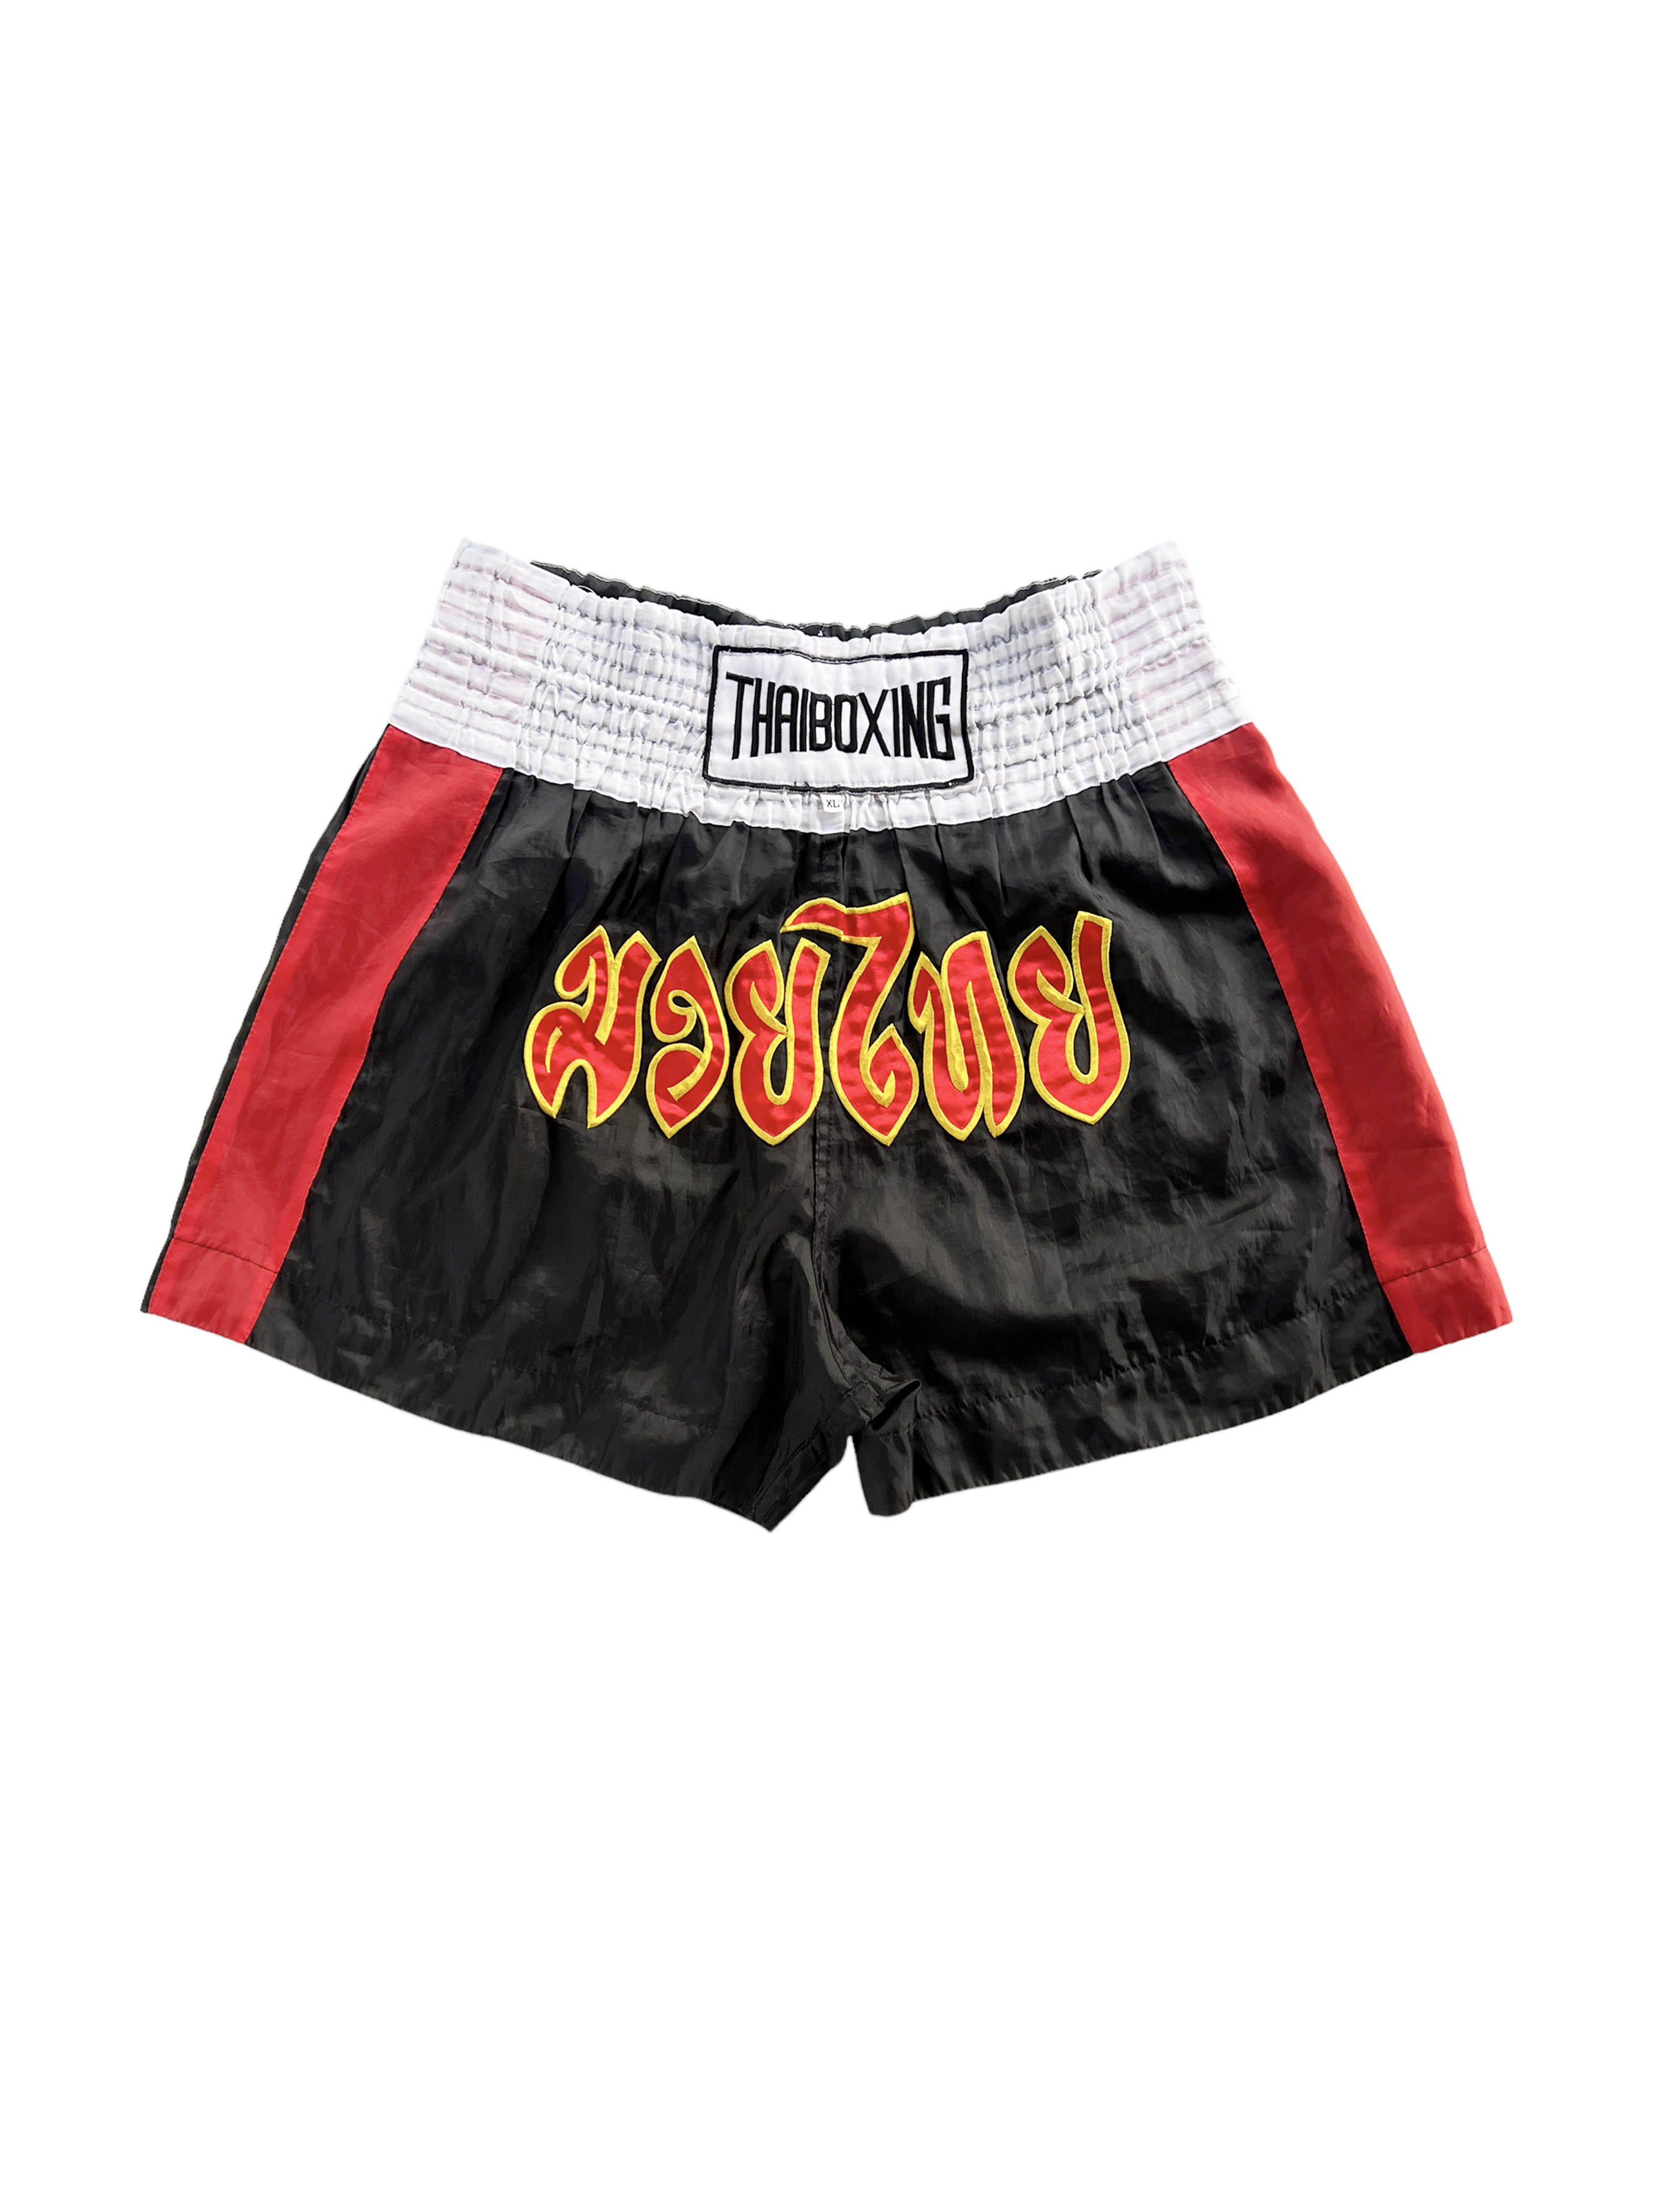 vintage boxing shorts